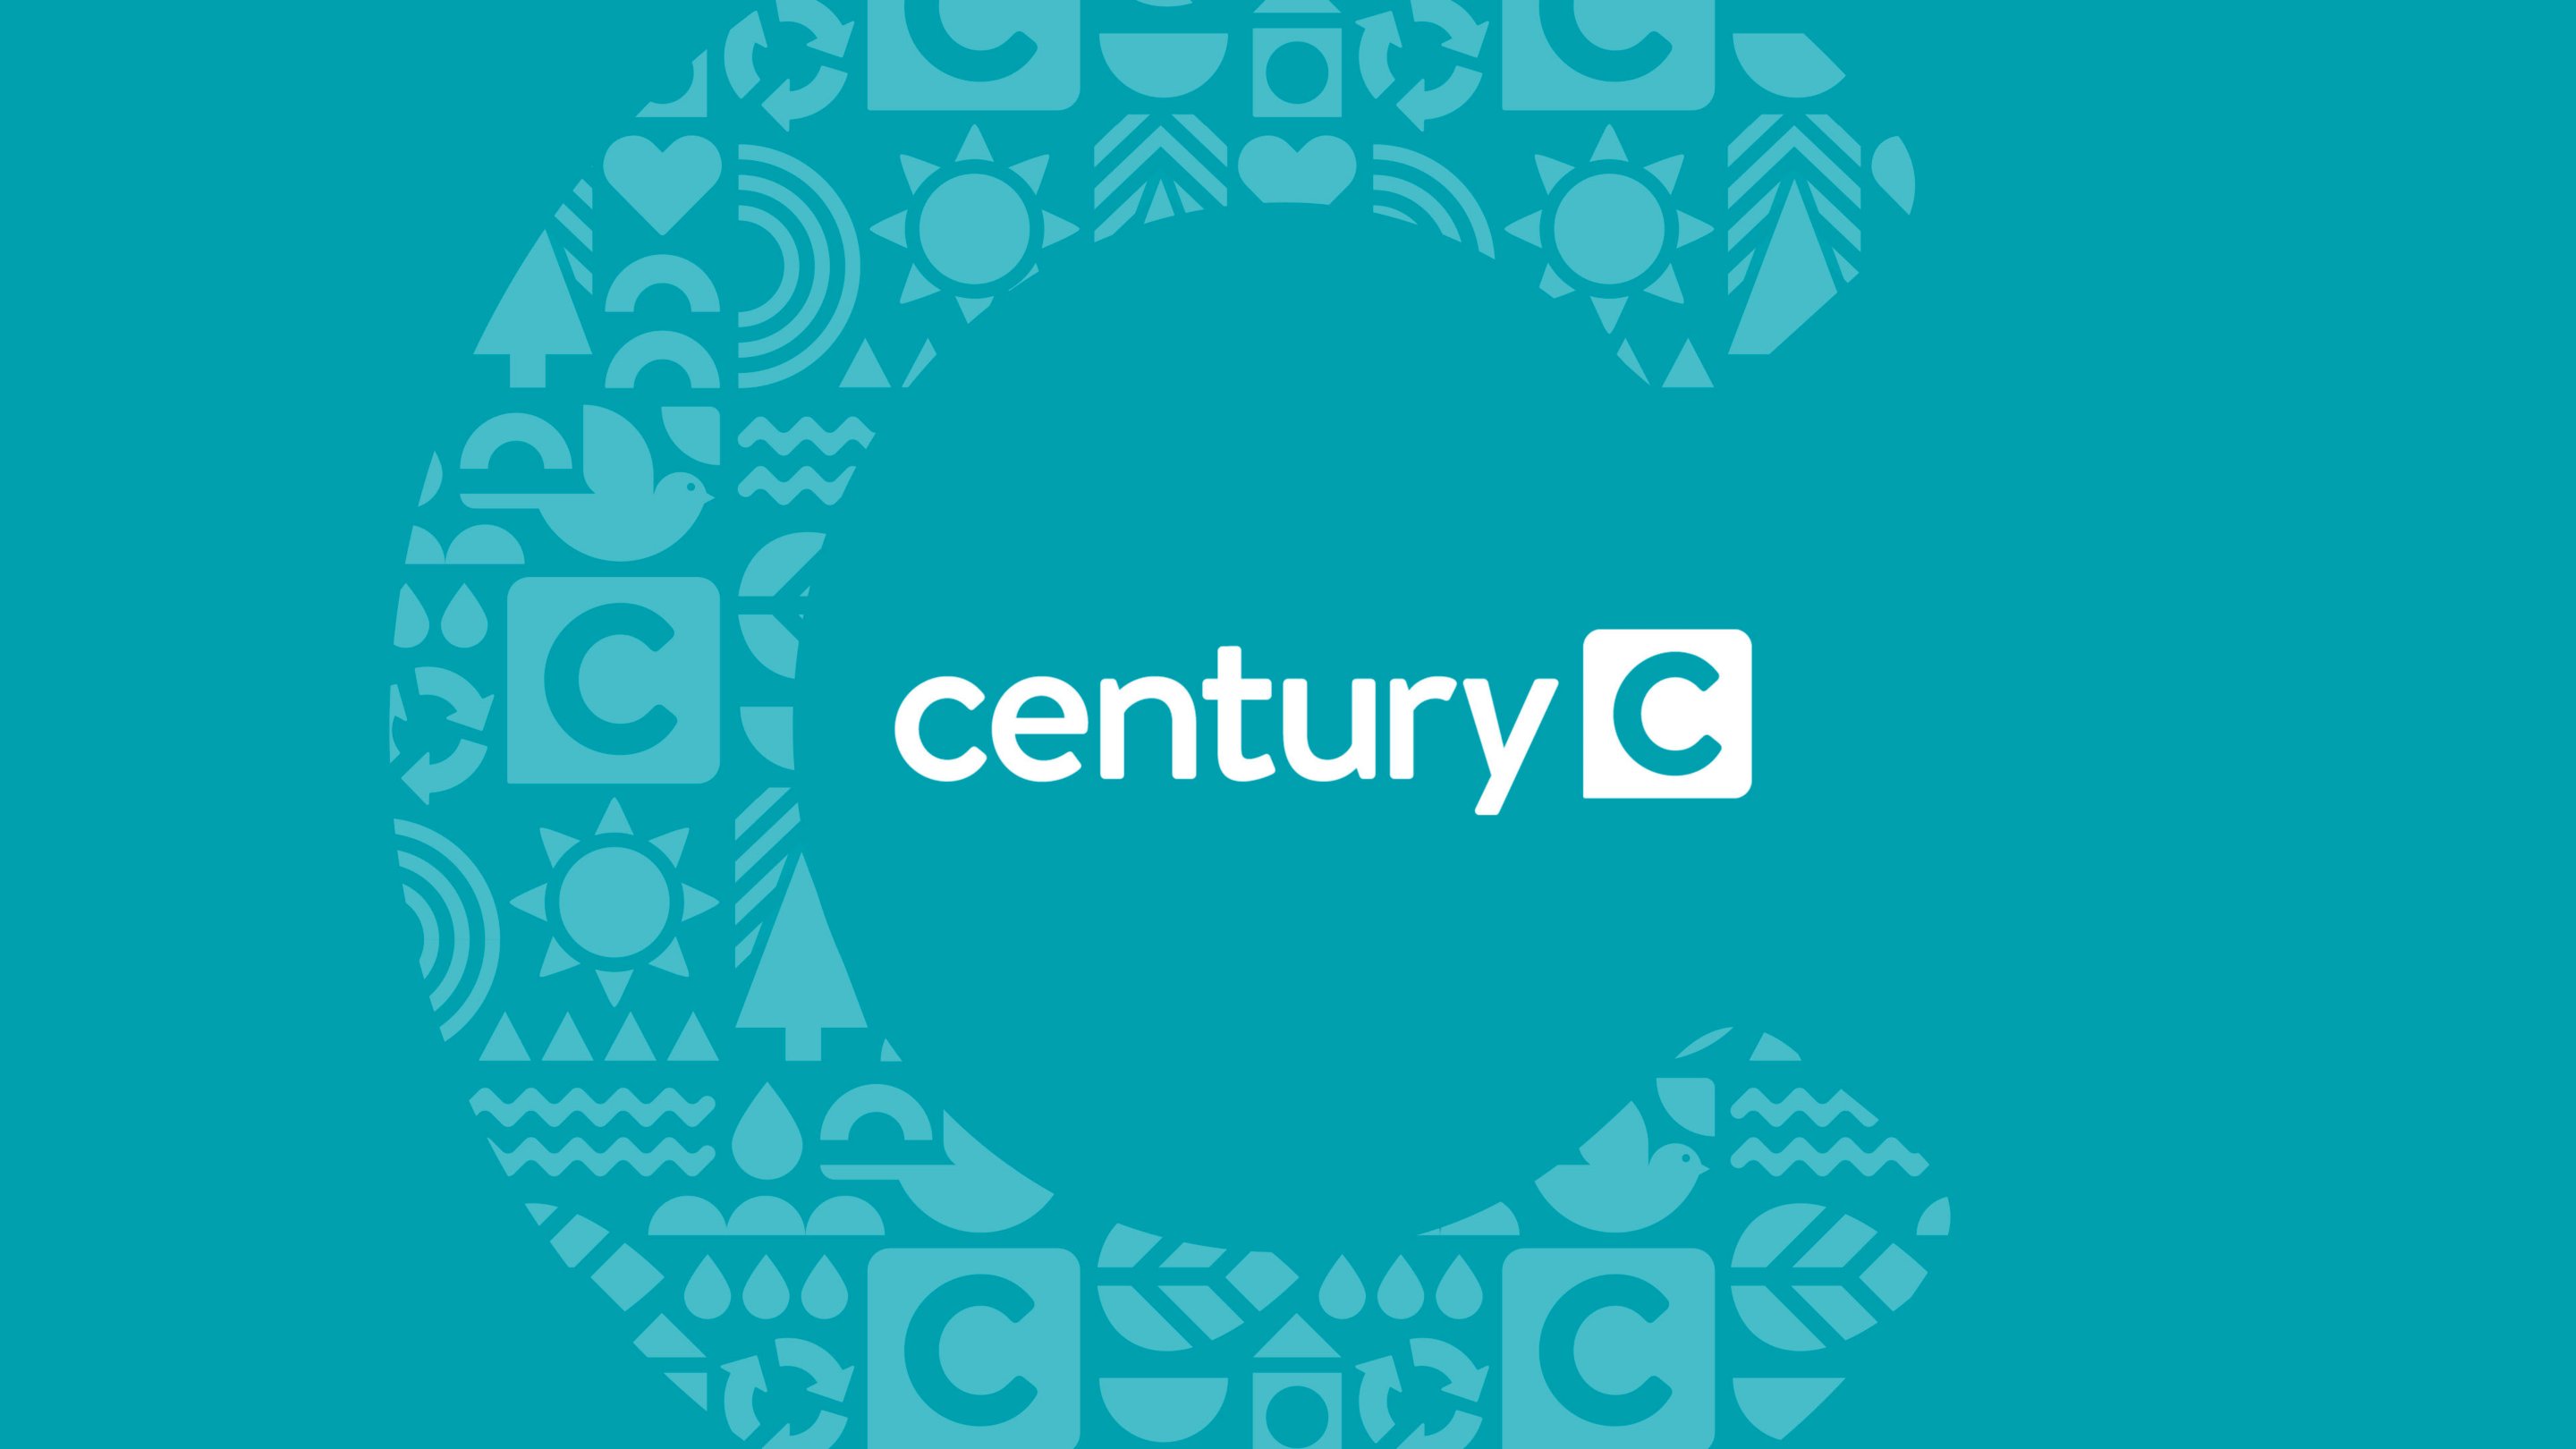 century logo do more hero banner